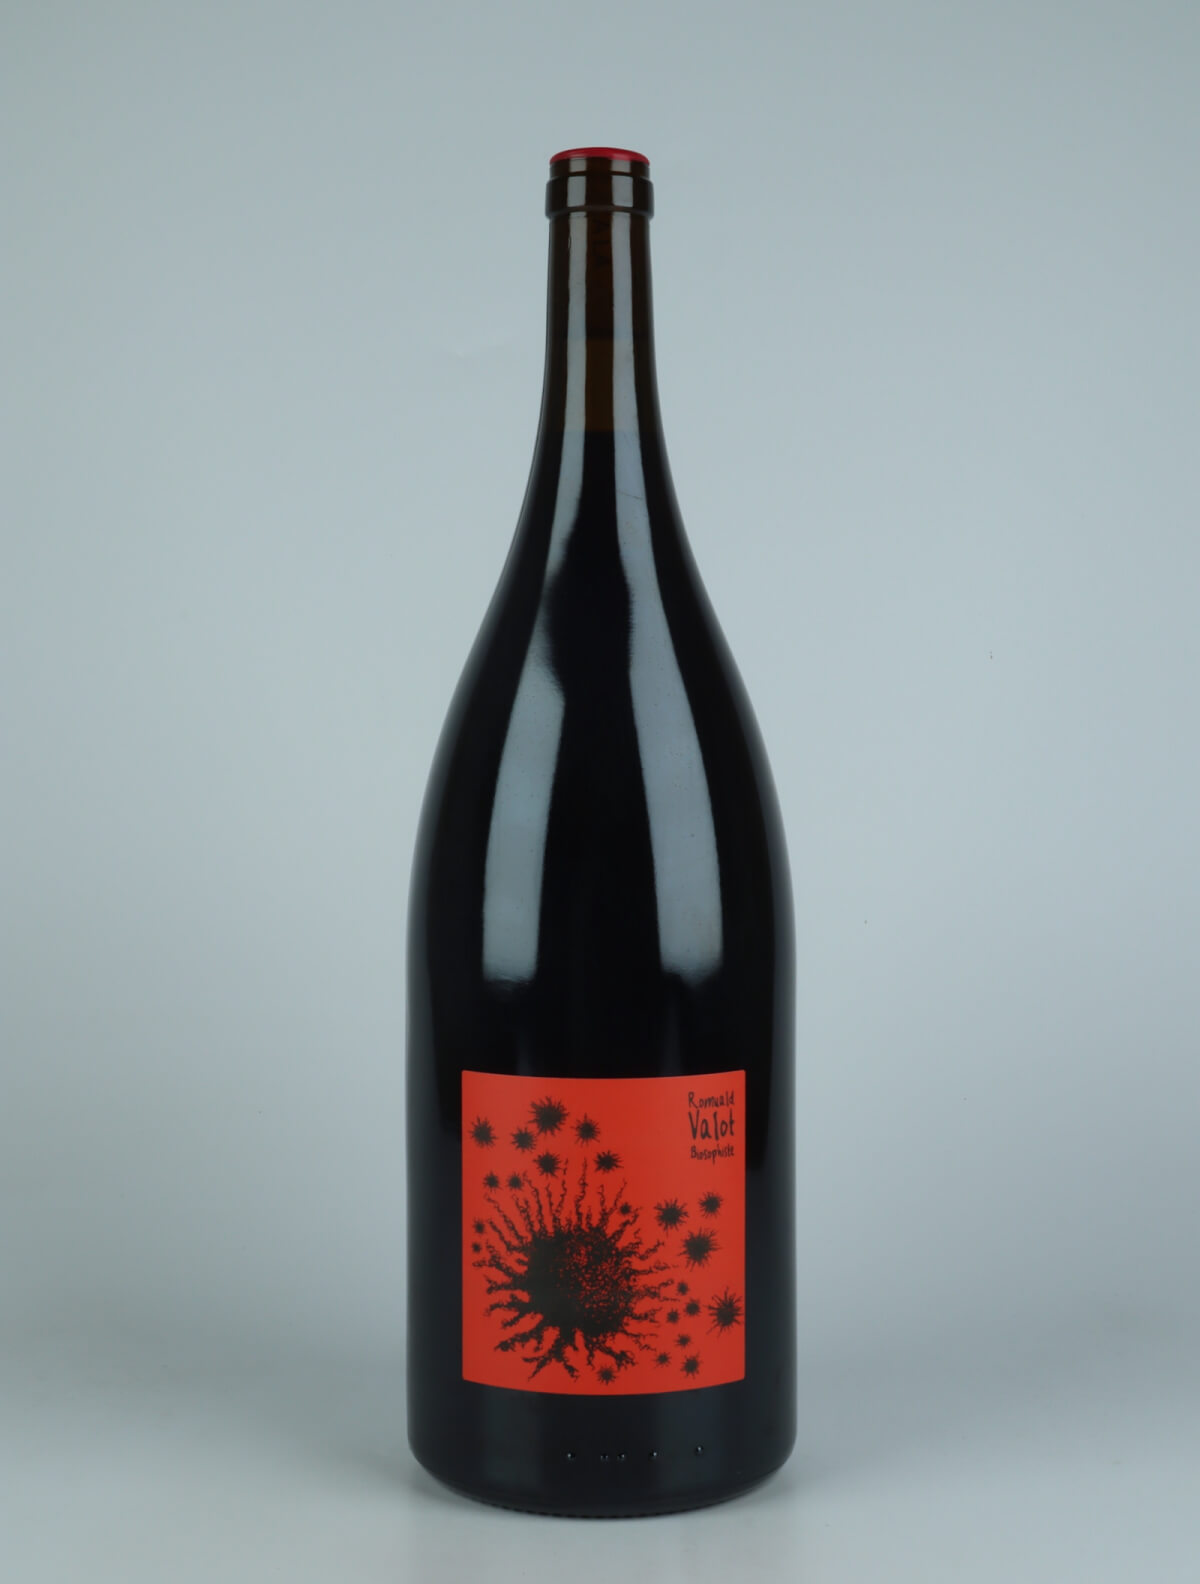 En flaske 2022 Beaujolais-Villages Rødvin fra Romuald Valot, Beaujolais i Frankrig